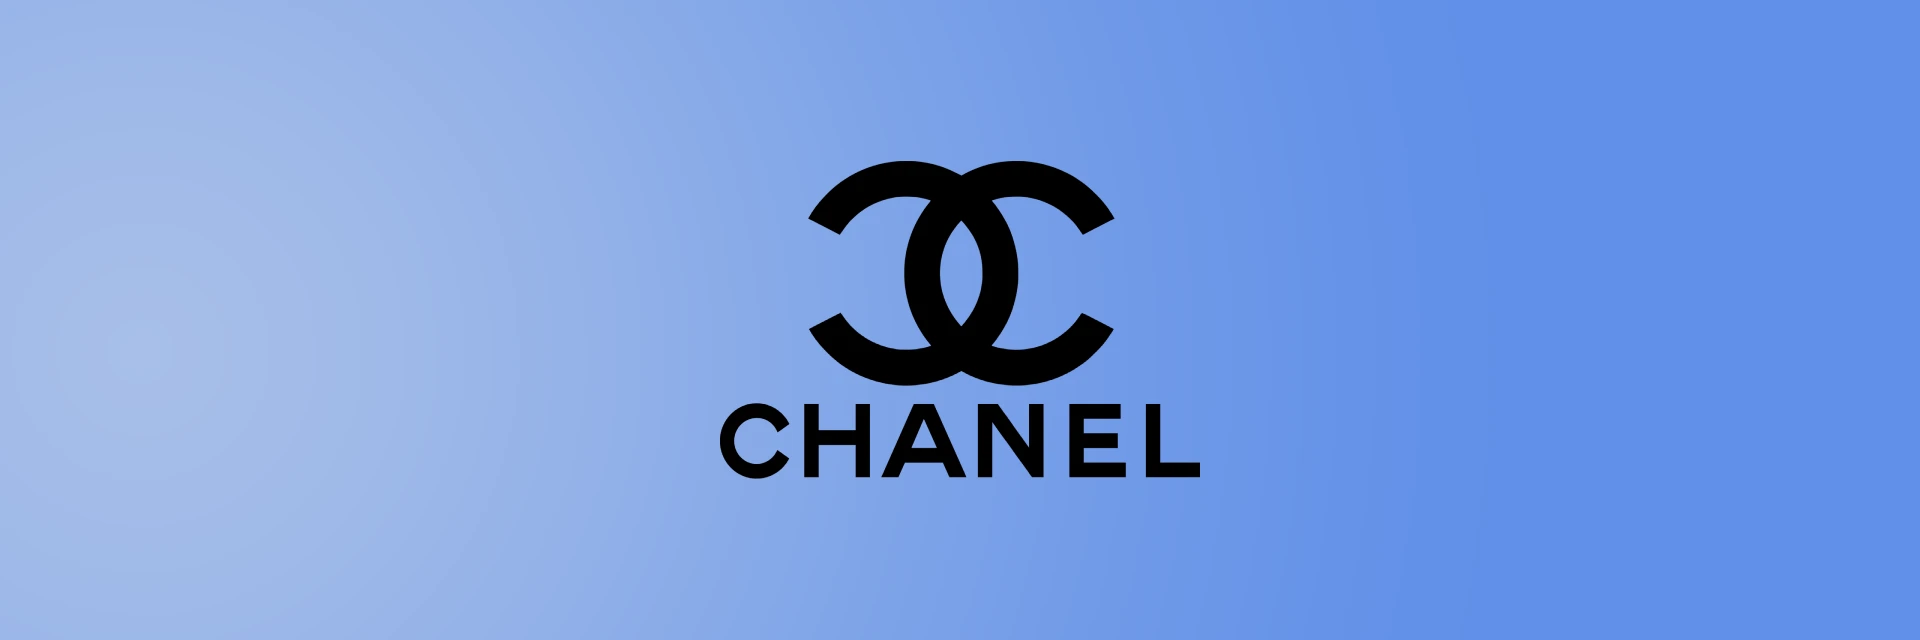 Chanel Perfume Brand Banner Image